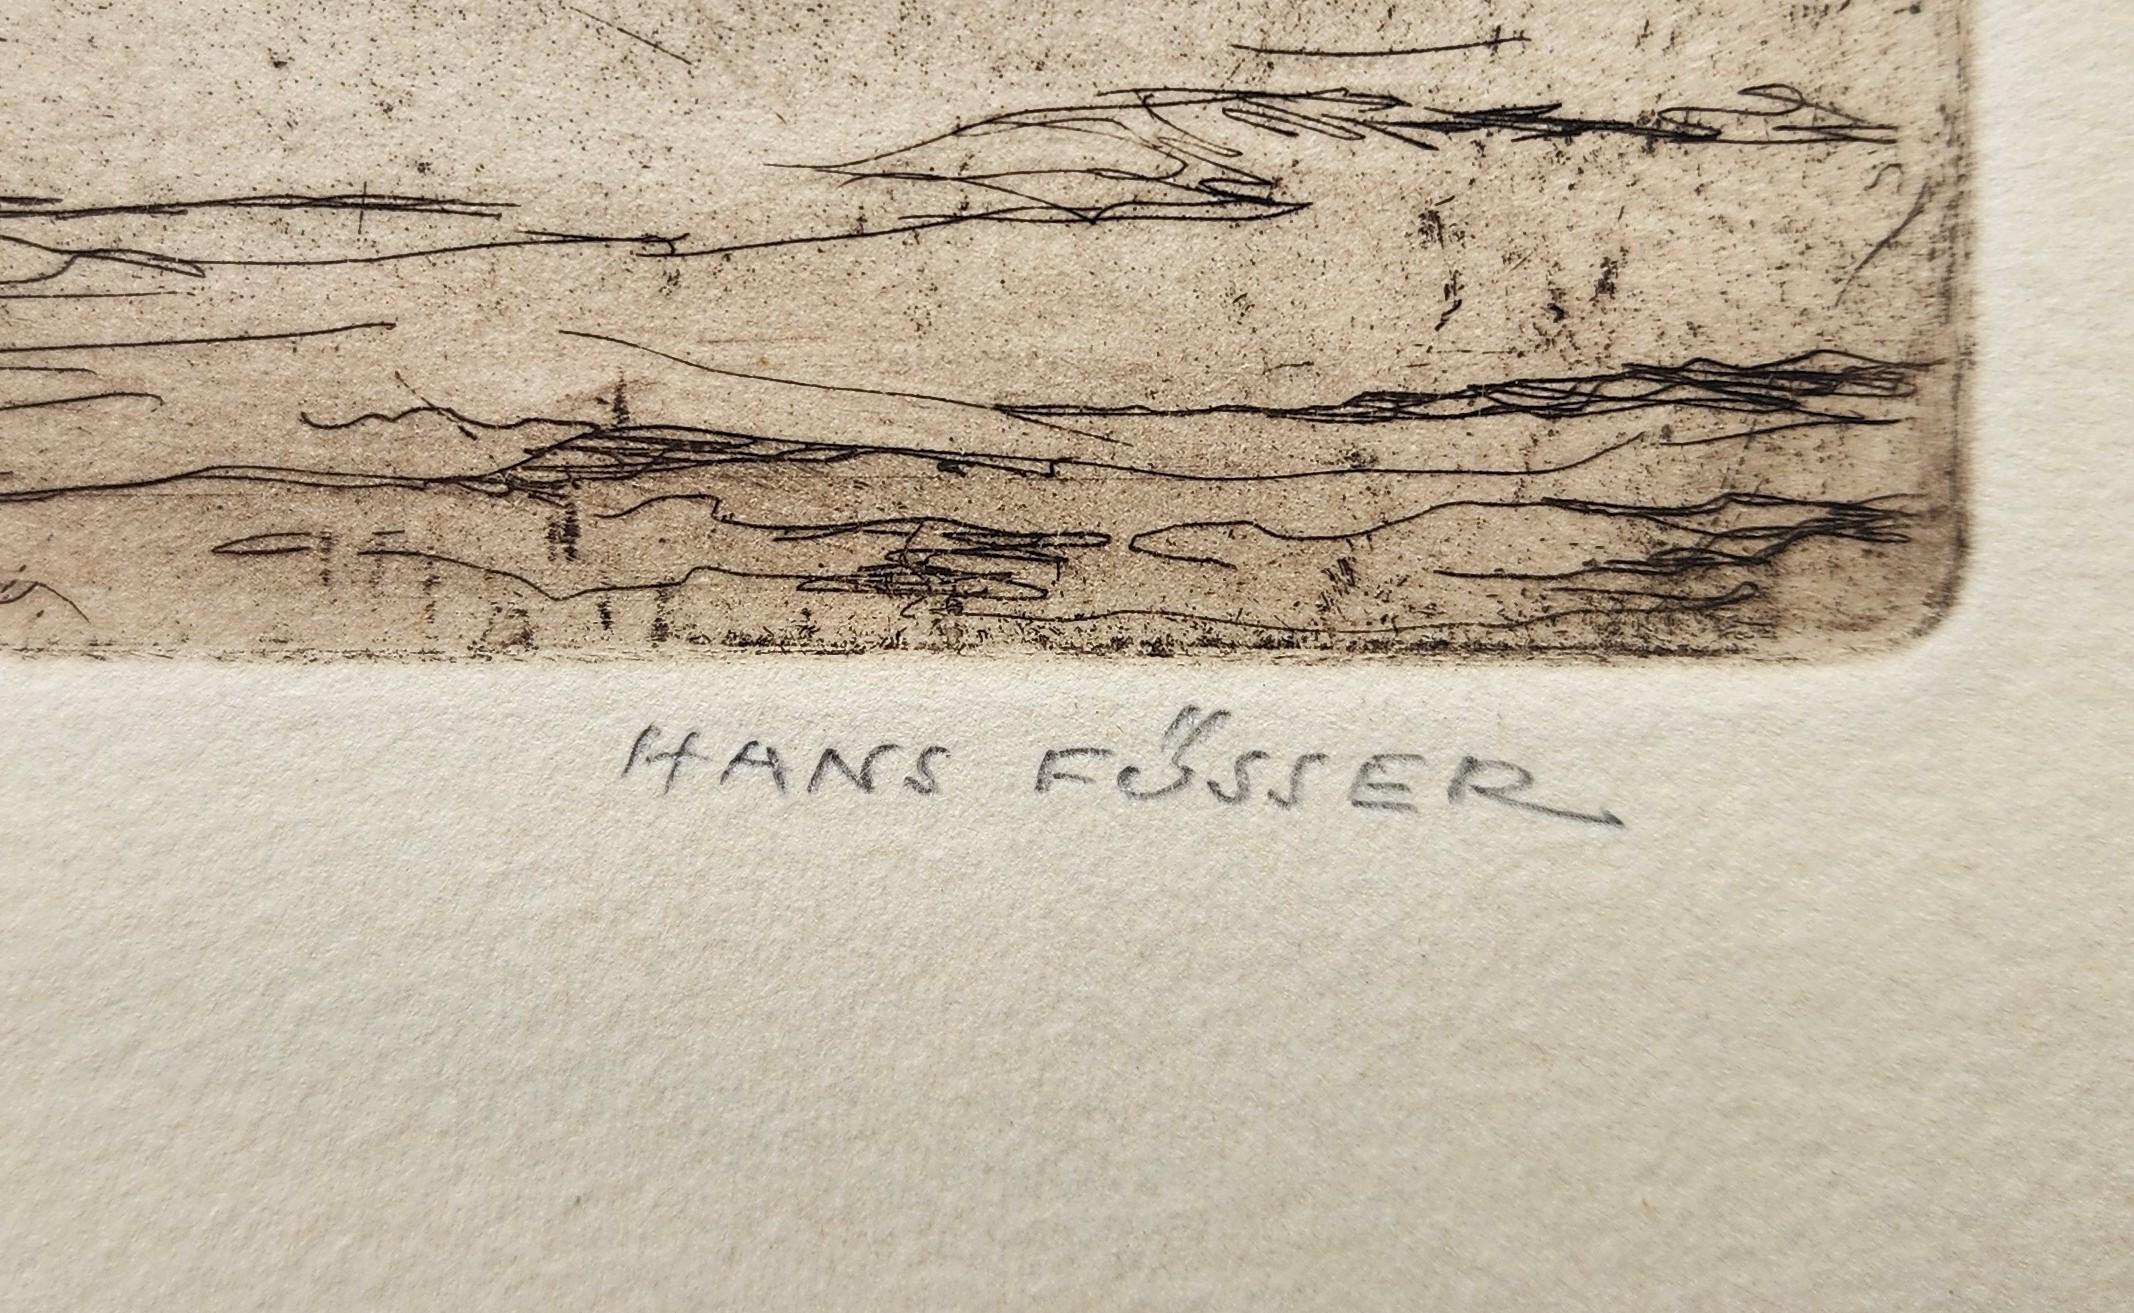 Hans Füsser (German, 1898-1959)

Signed: Hans Füsser (Lower, Right)

